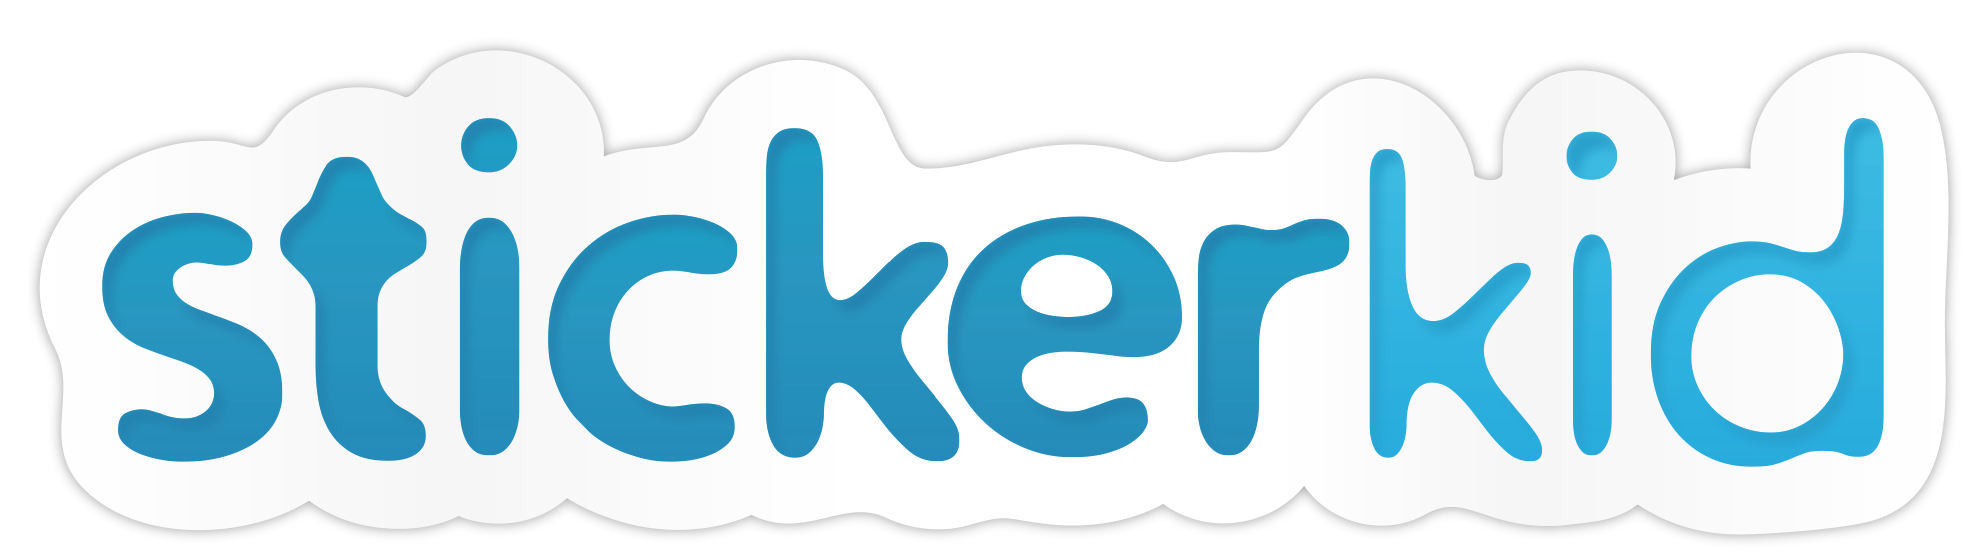 Logo du fabricant de stickers Stickerkid